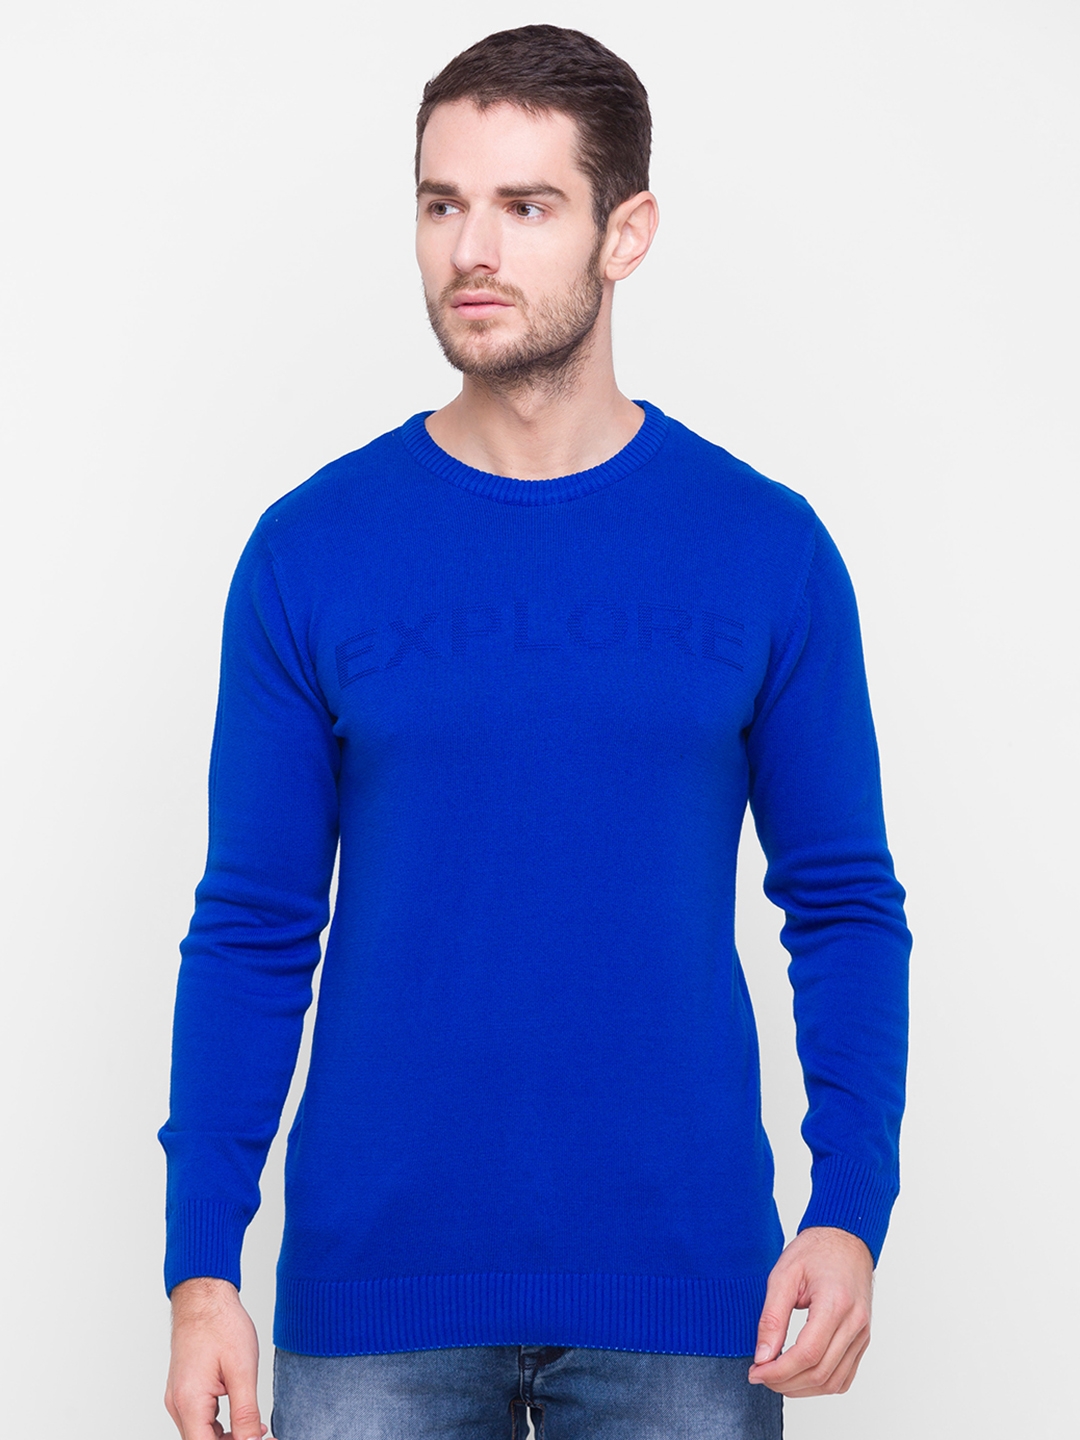 globus | Blue Textured T-Shirt 0